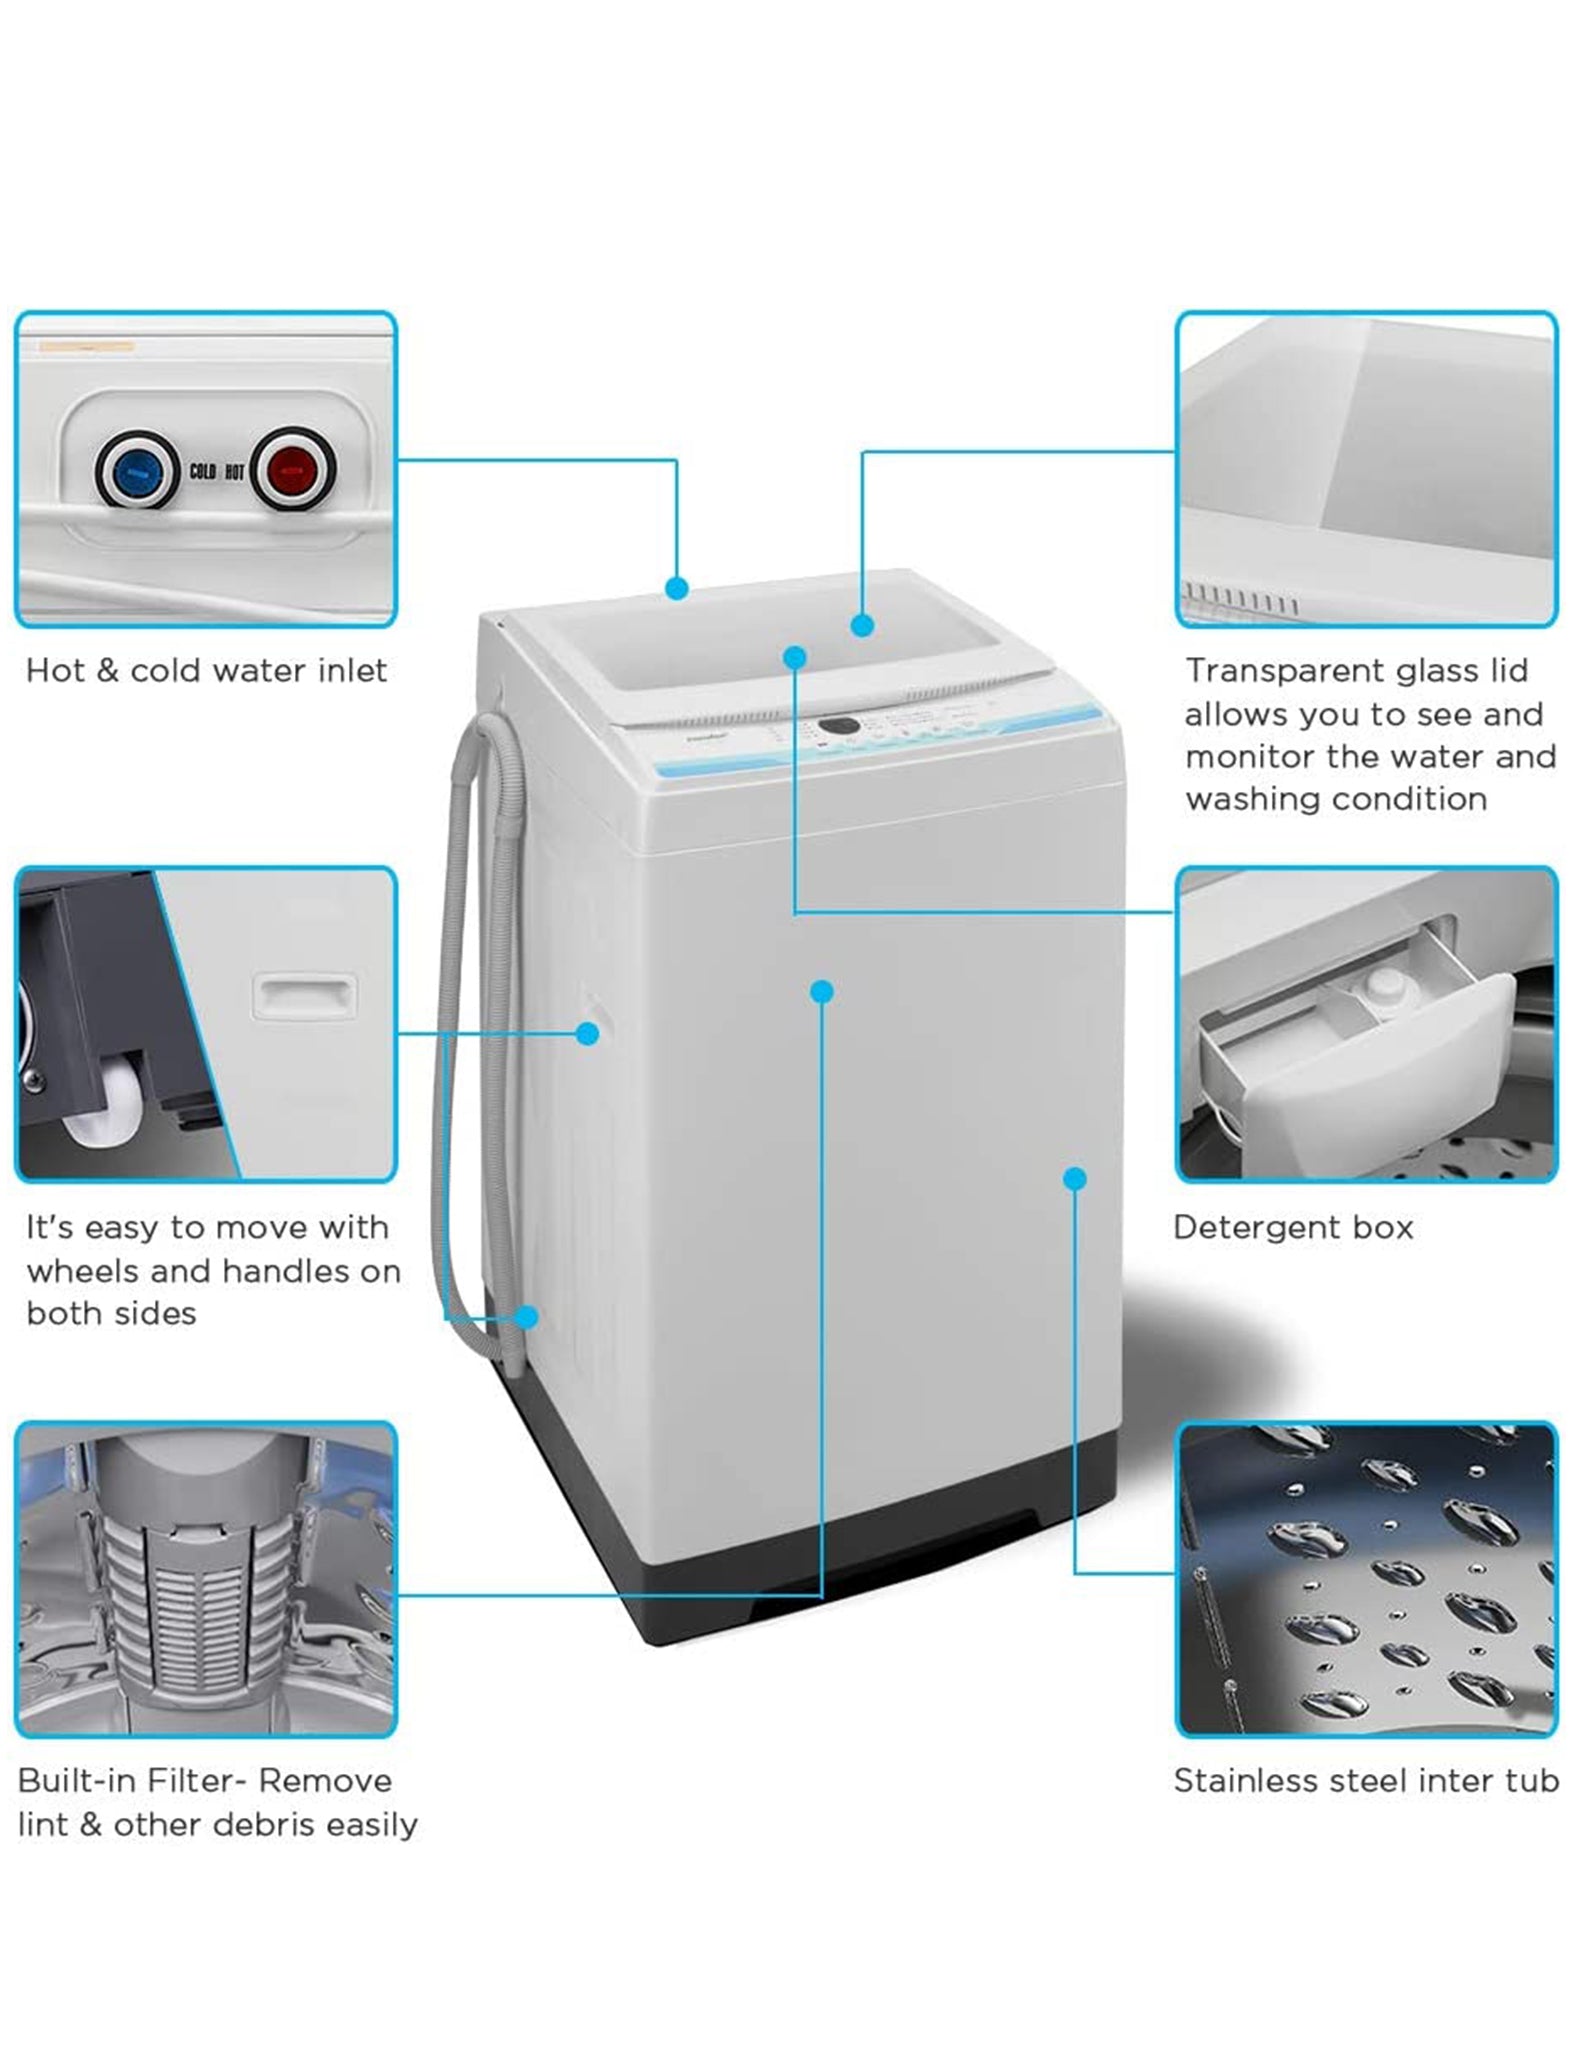 COMFEE' Washing Machine 2.4 Cu.ft LED Portable Washing Machine and